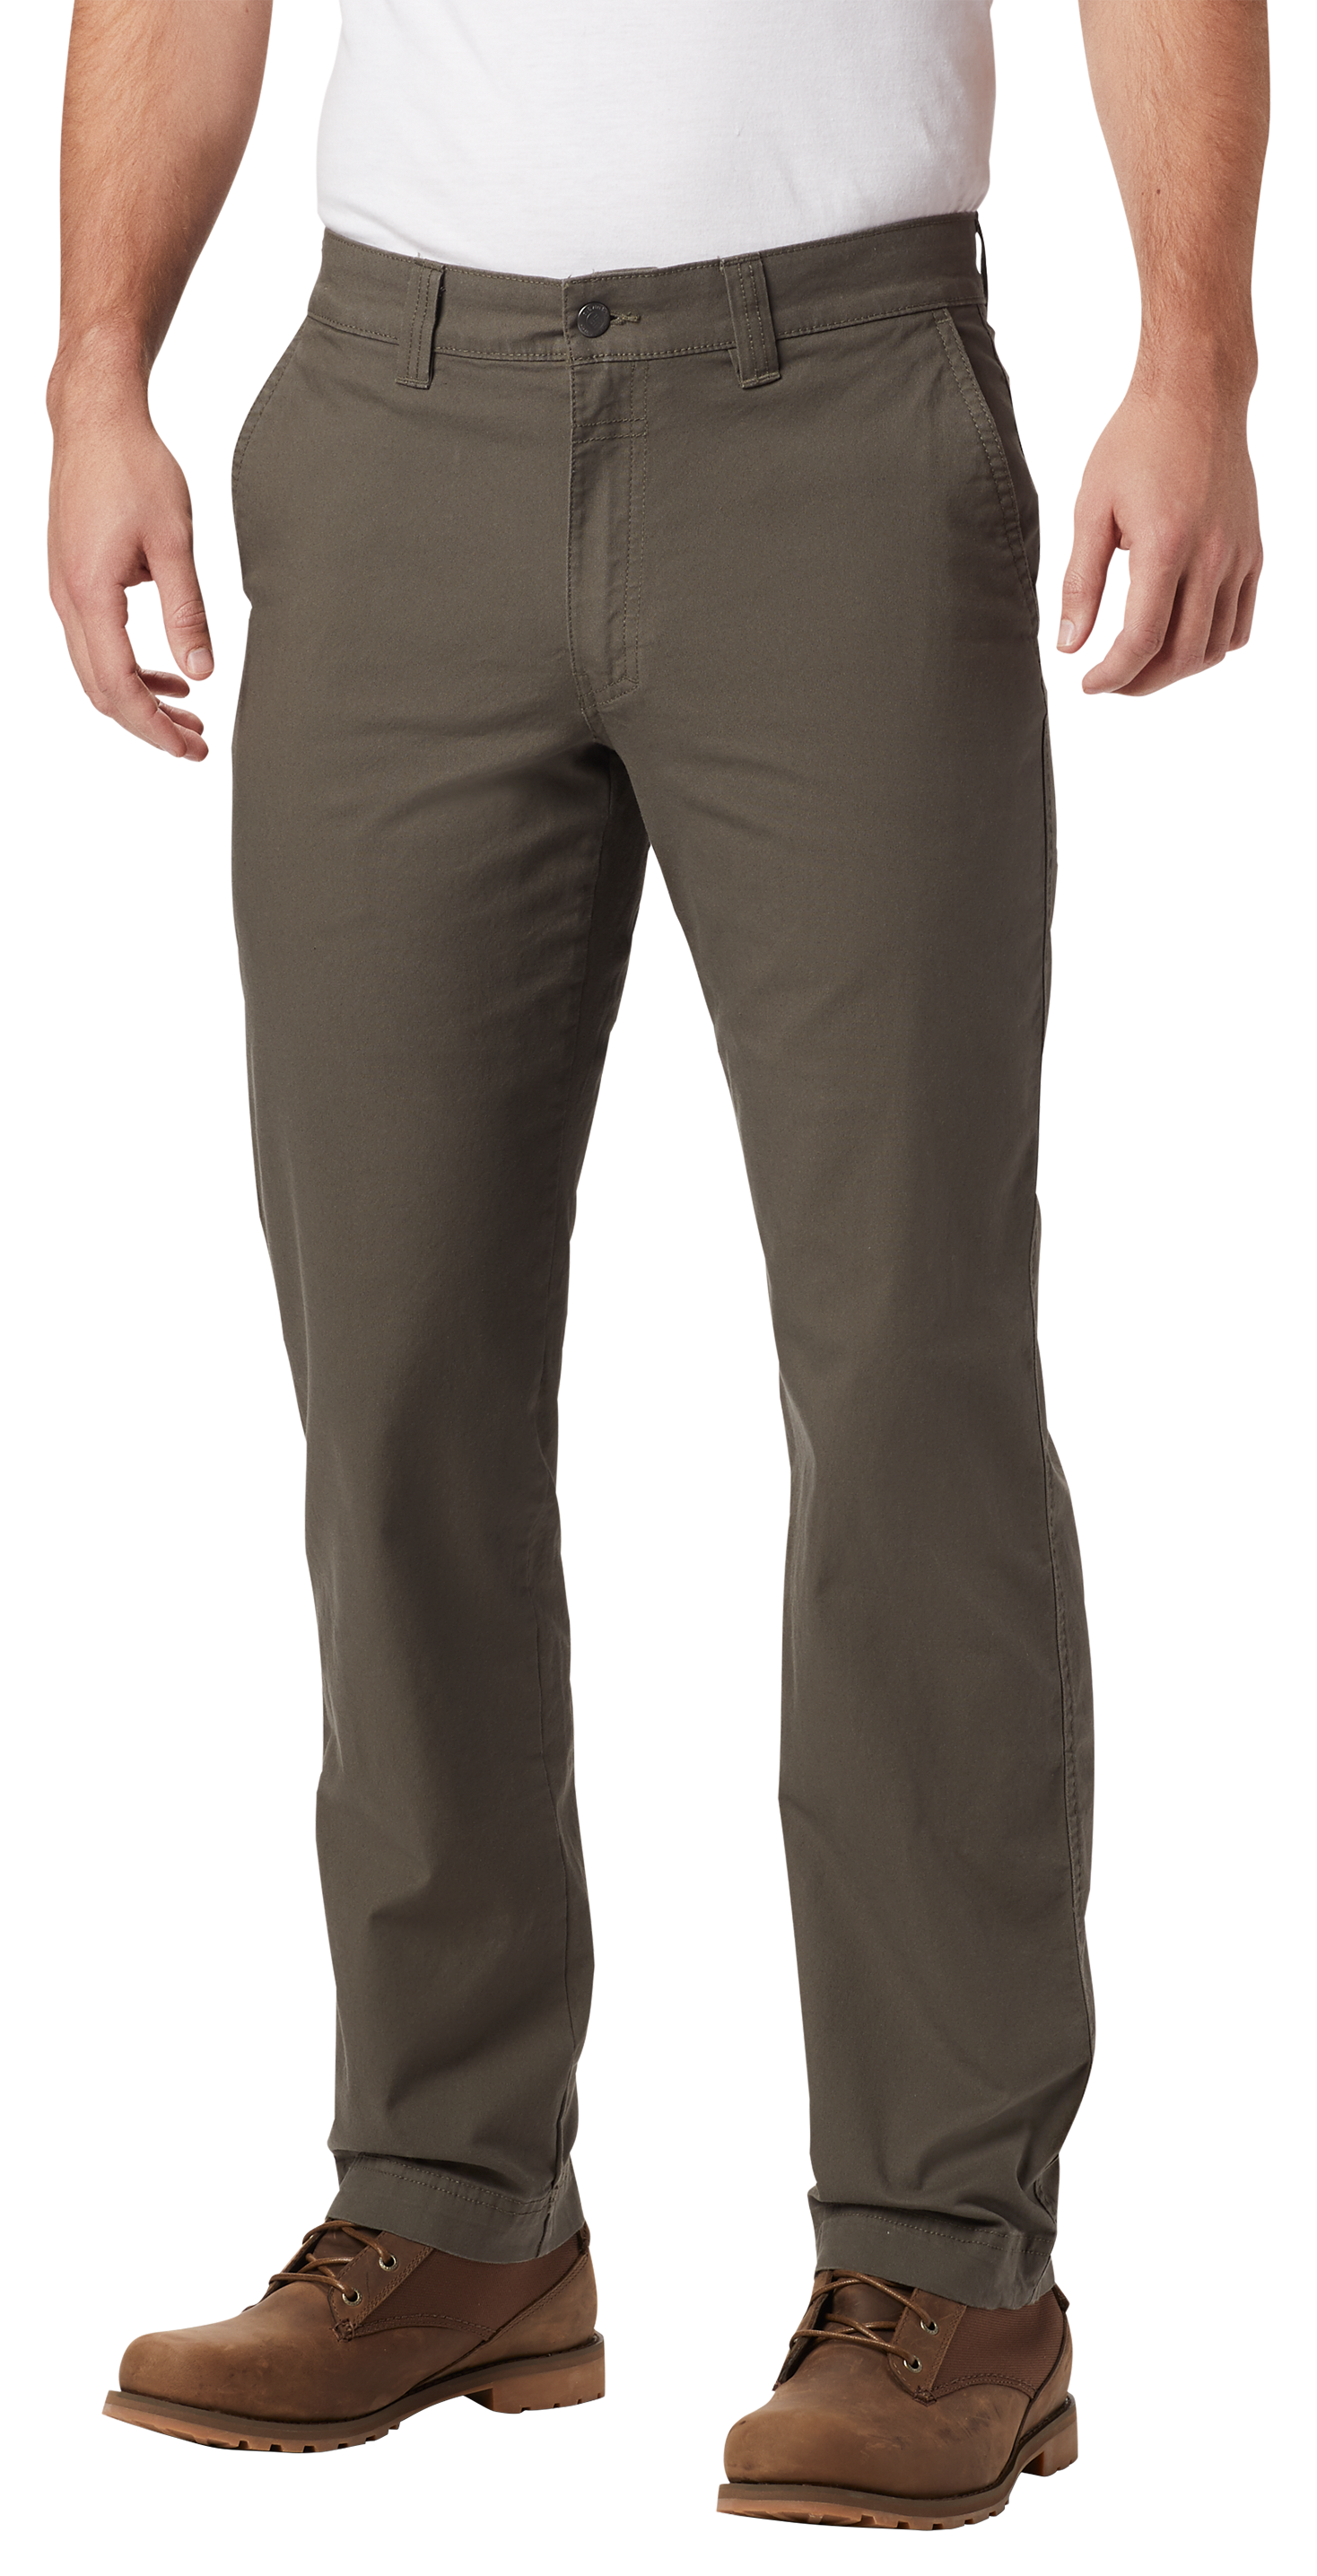 Columbia Flex ROC Pants for Men - Alpine Tundra - 30x32